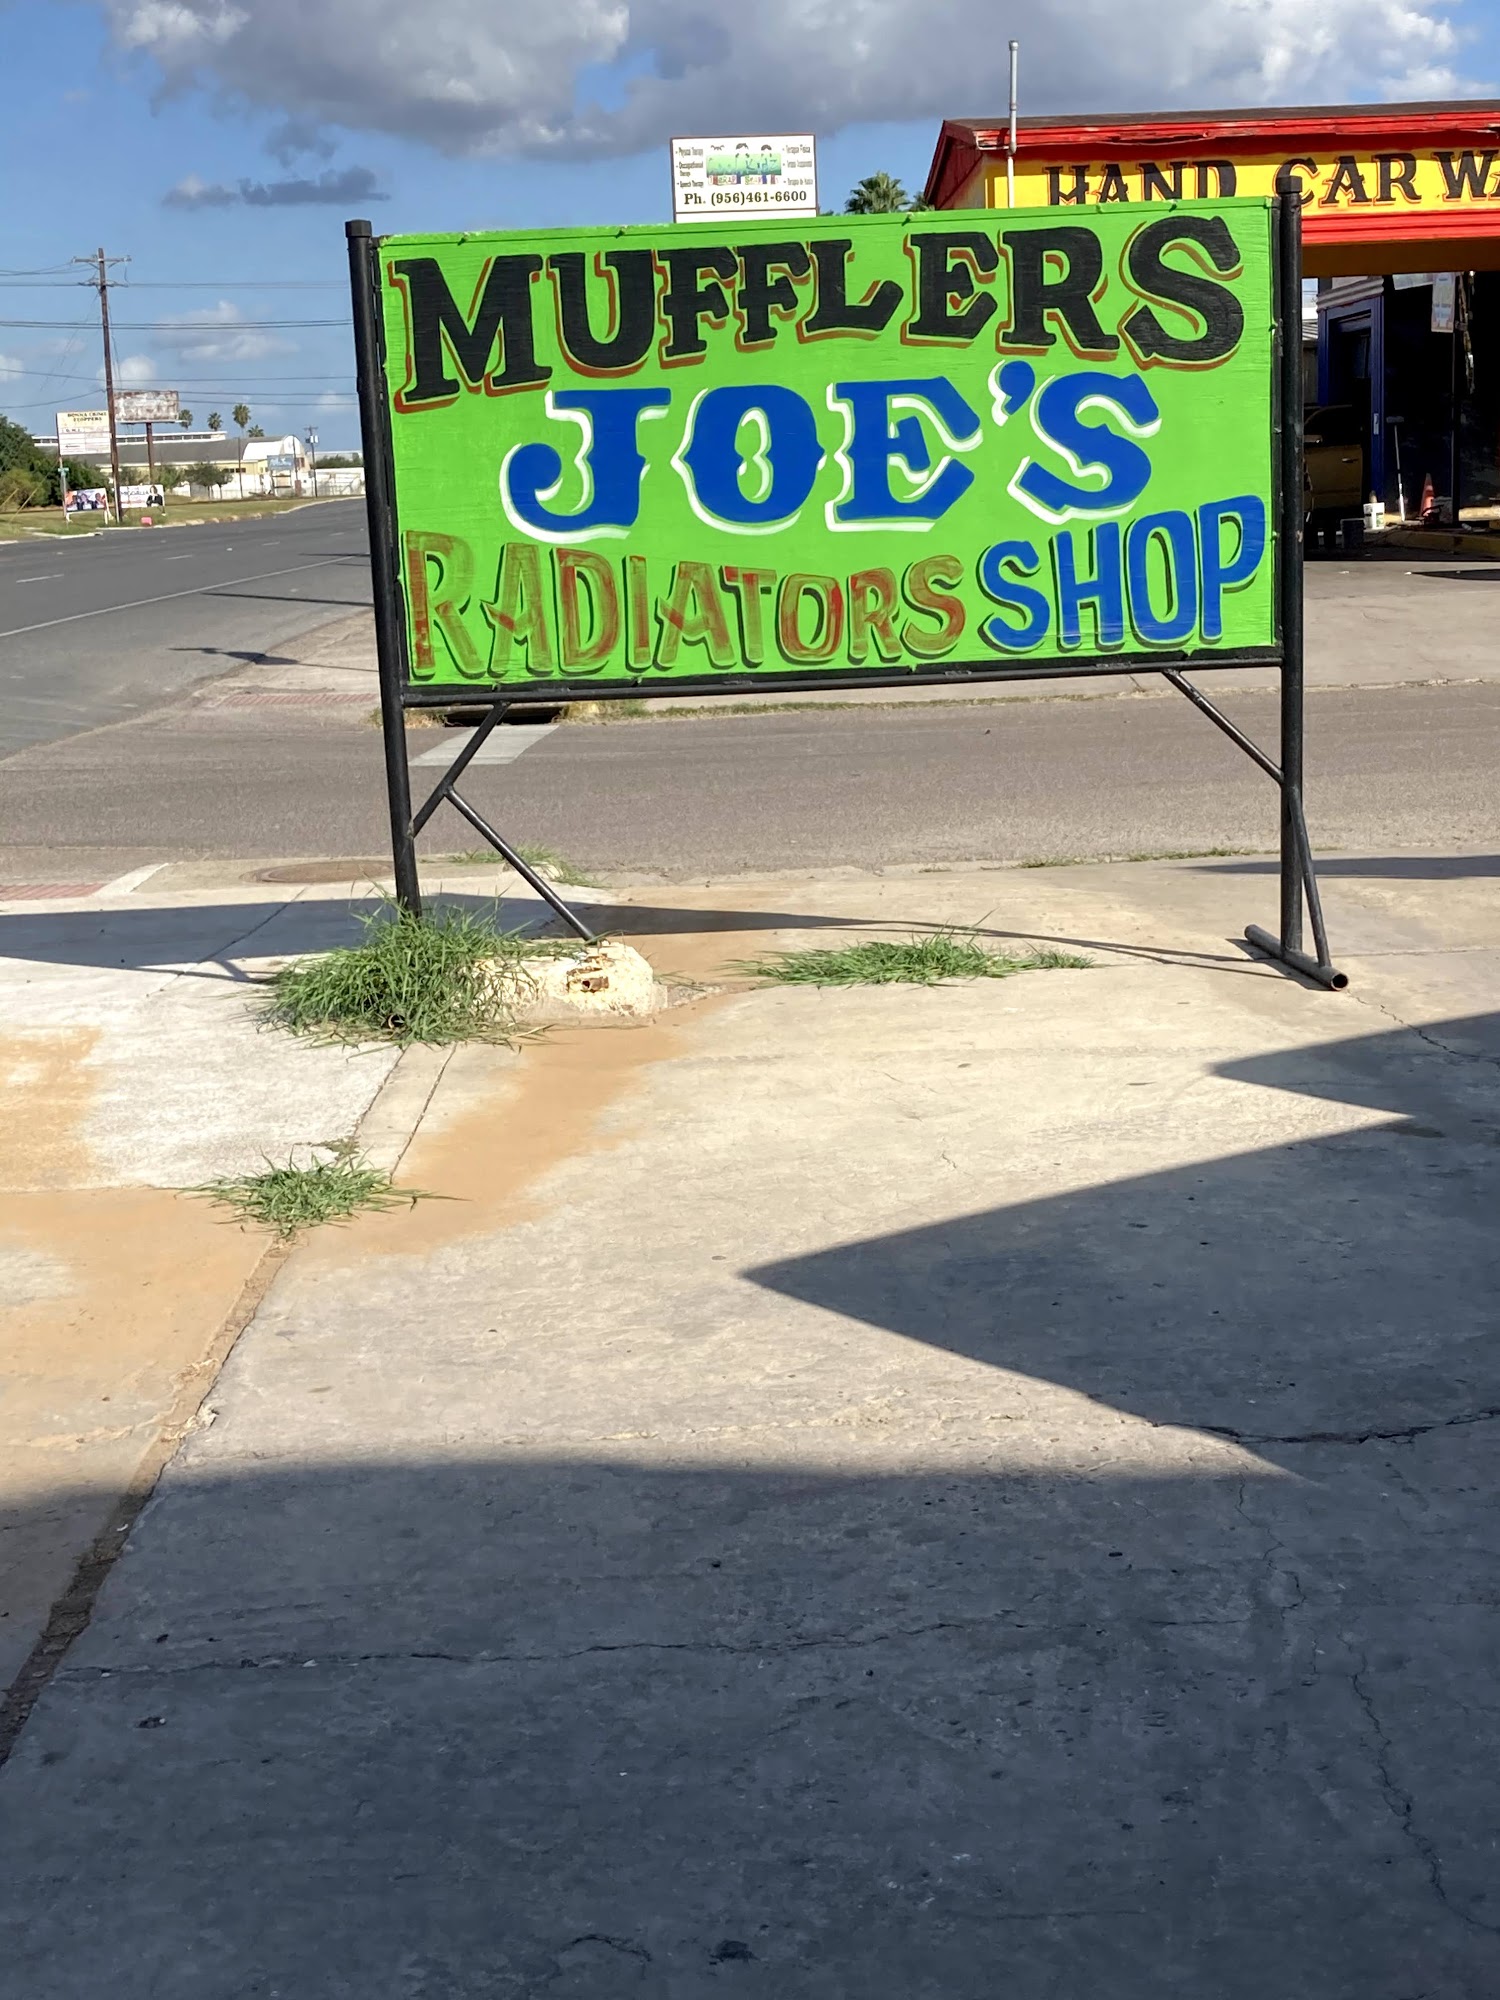 Joe's Radiator Shop